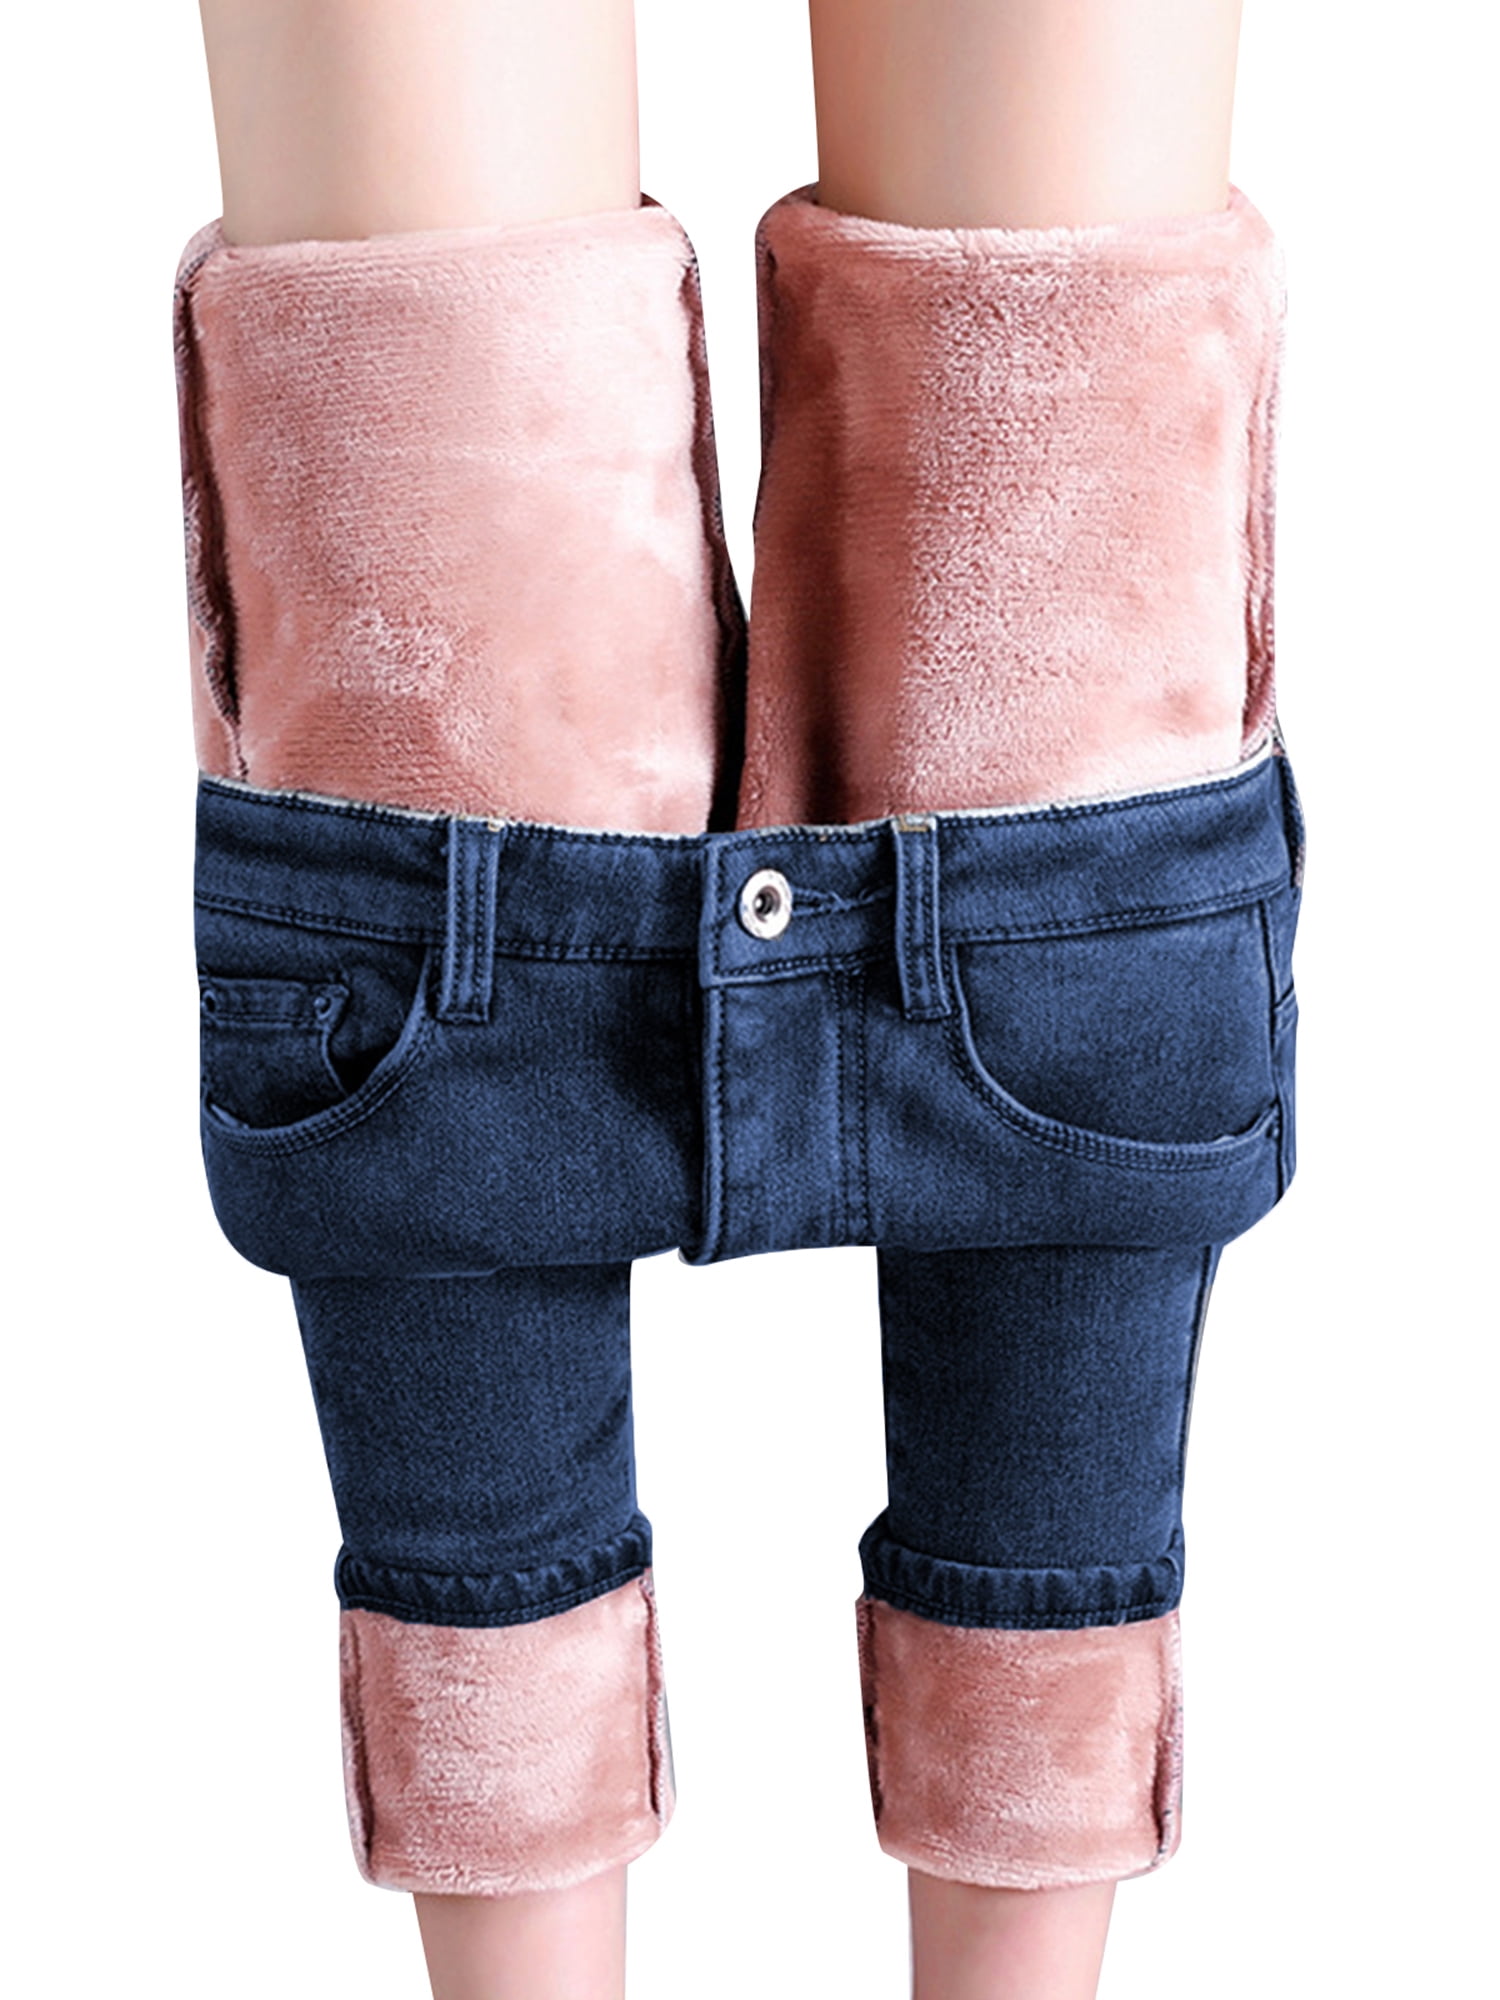 Men's Thermal Jeans Fleece Lined Denim Long Pants Winter Stretch Warm Trousers